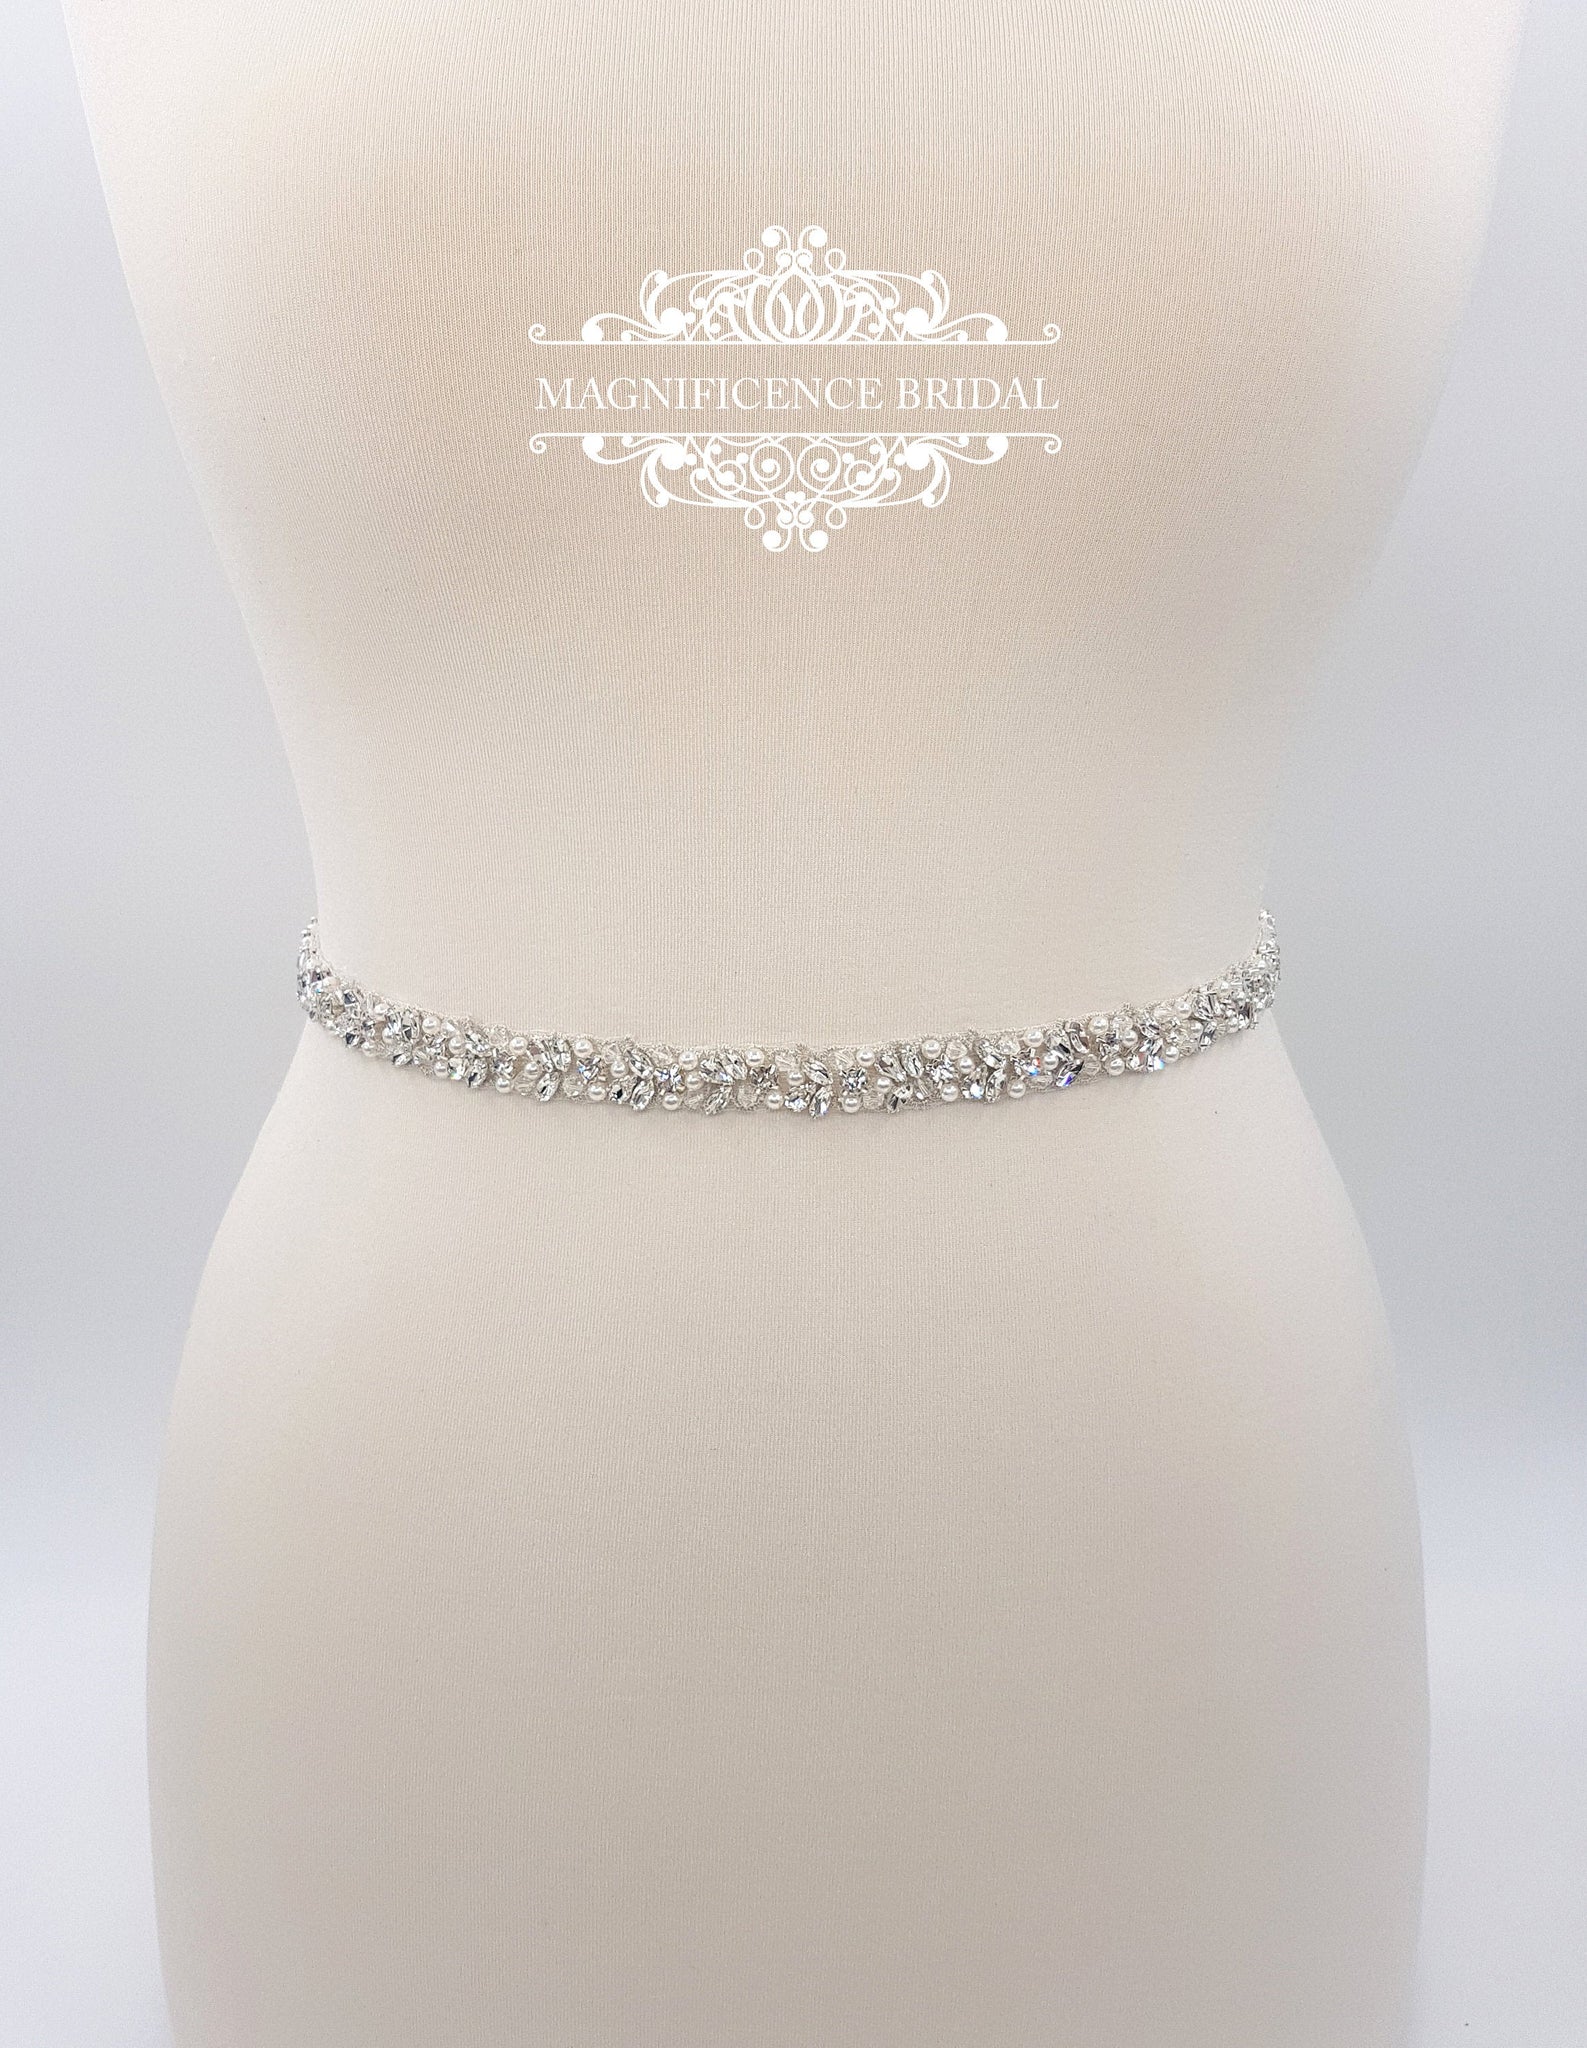 MissRDress Pearls Wedding Belt Rhinestones Belt Bridal Gown Belts Silver  Crystal Bridal Belt For Wedding Gown YS837230c From Ai789, $12.04